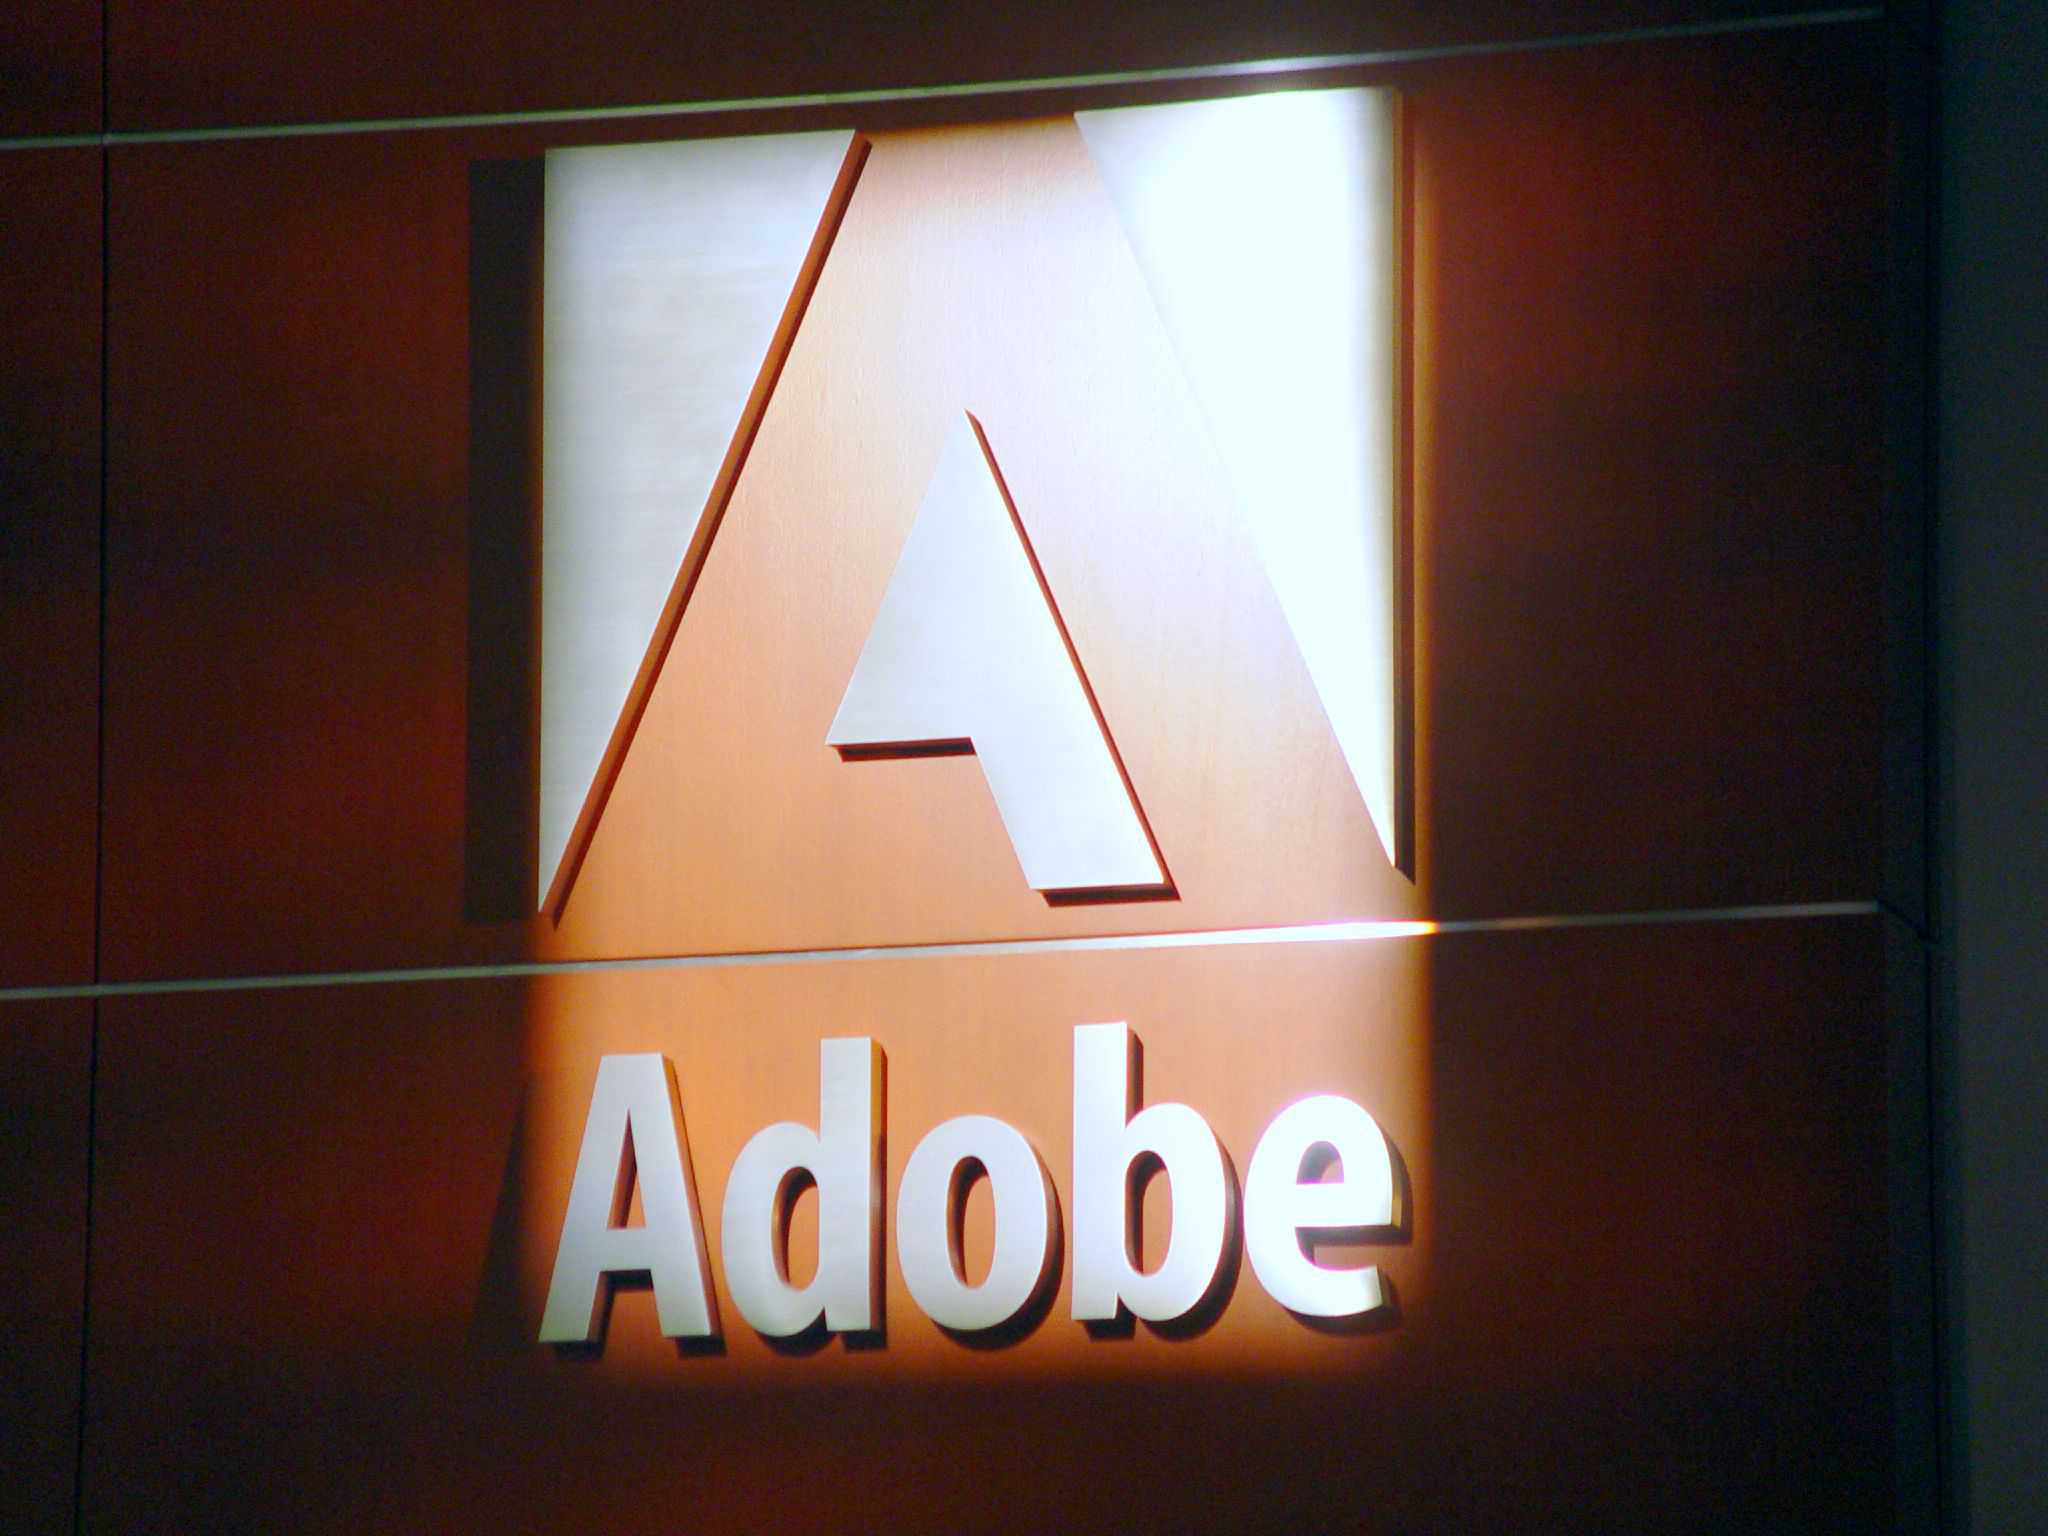 Adobe logo by midiman